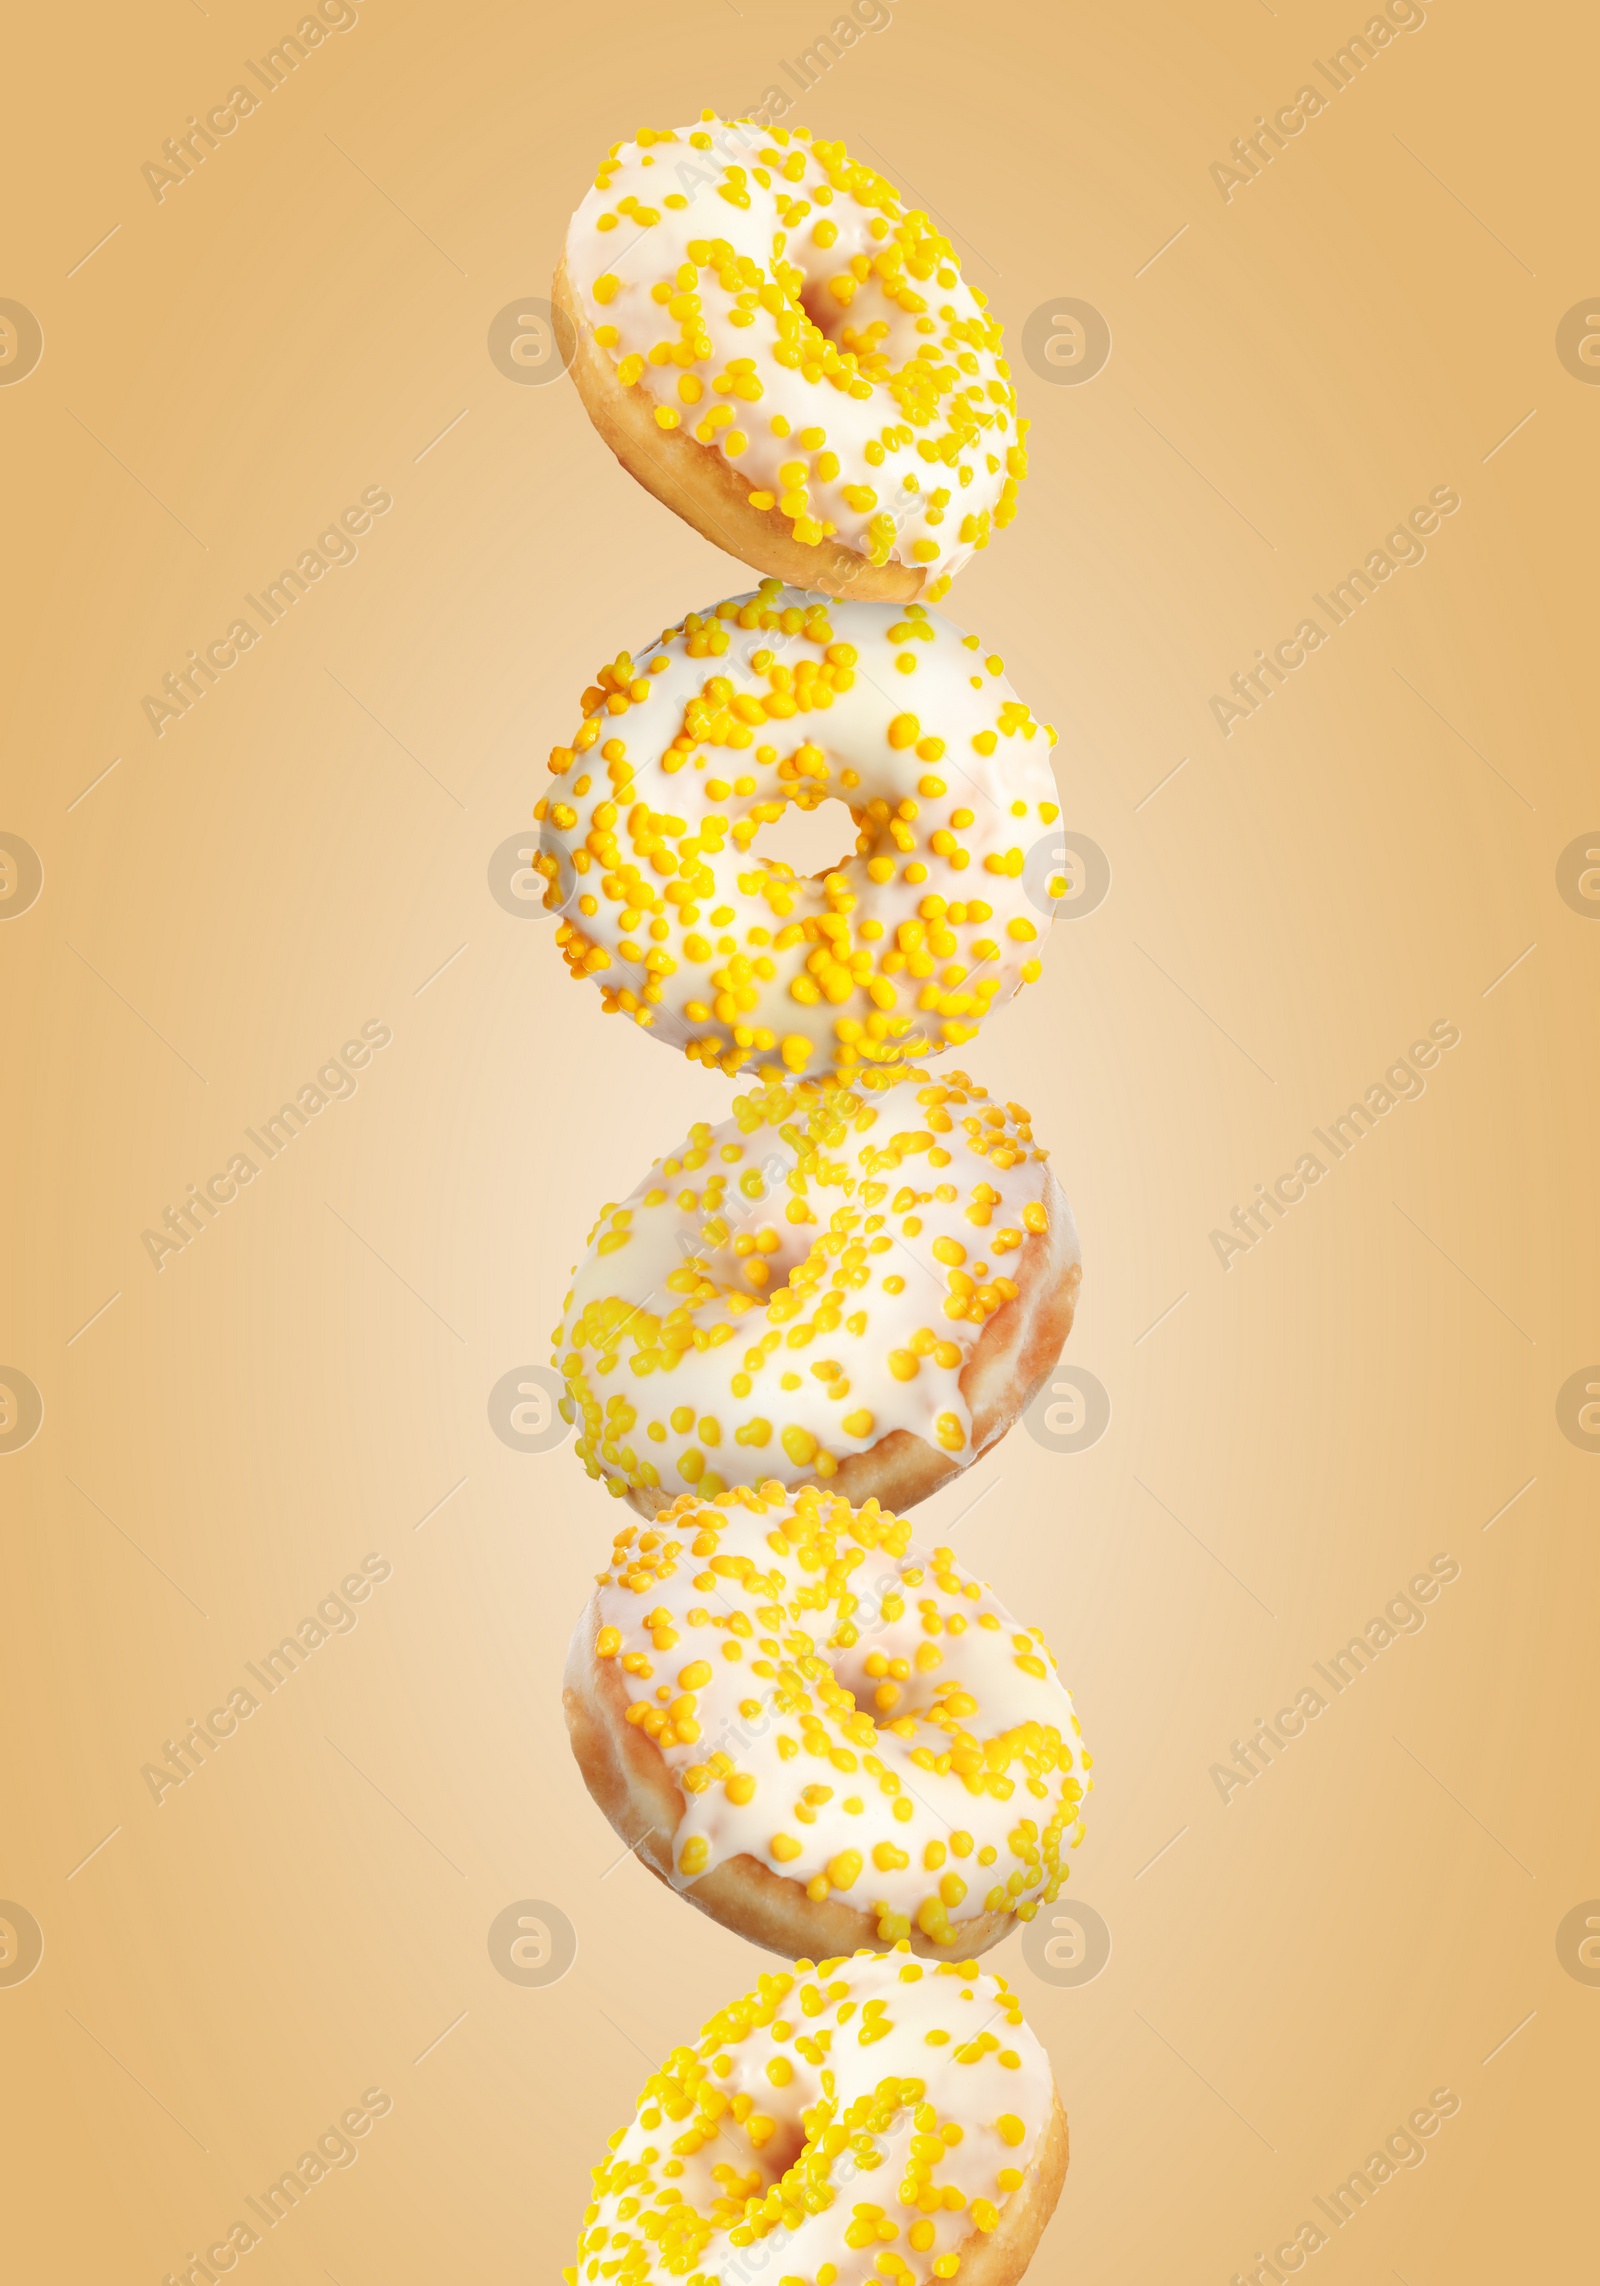 Image of Tasty donuts with sprinkles on light orange background